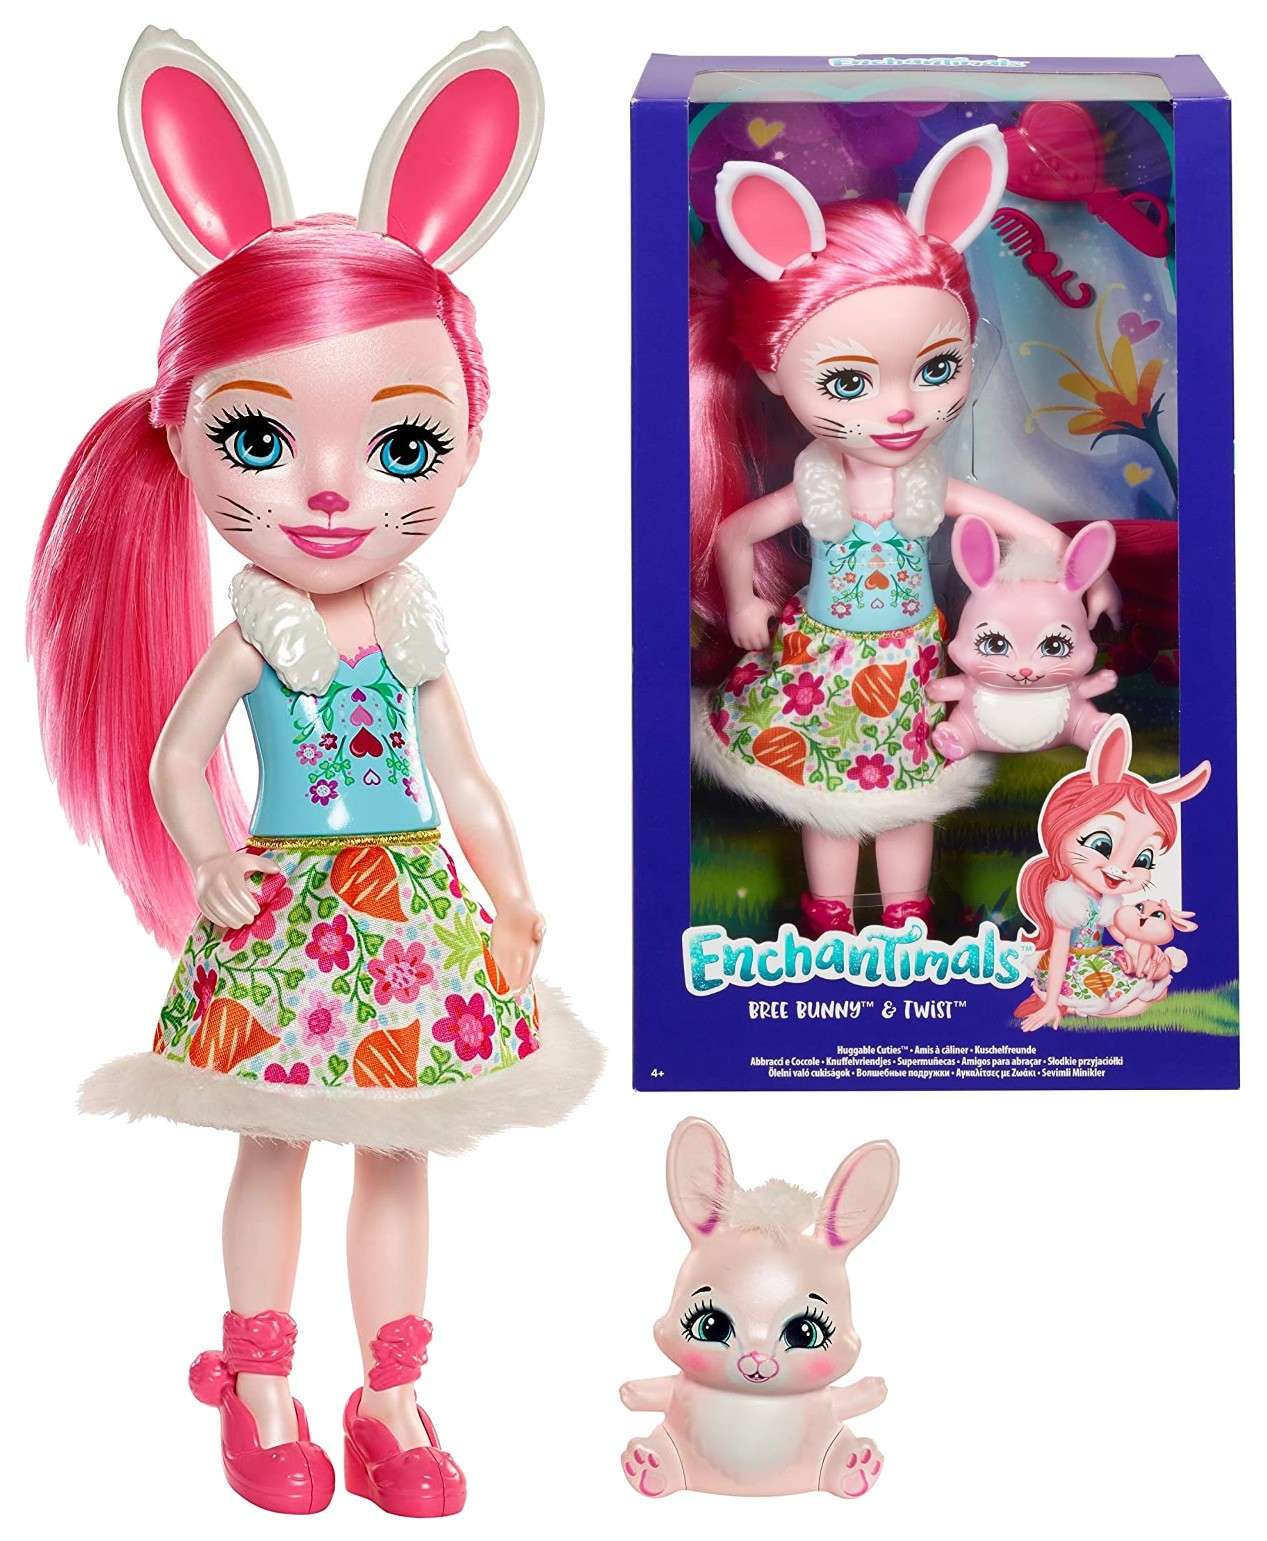 Enchantimals Bree Bunny du¿a lalka z króliczkiem Twist